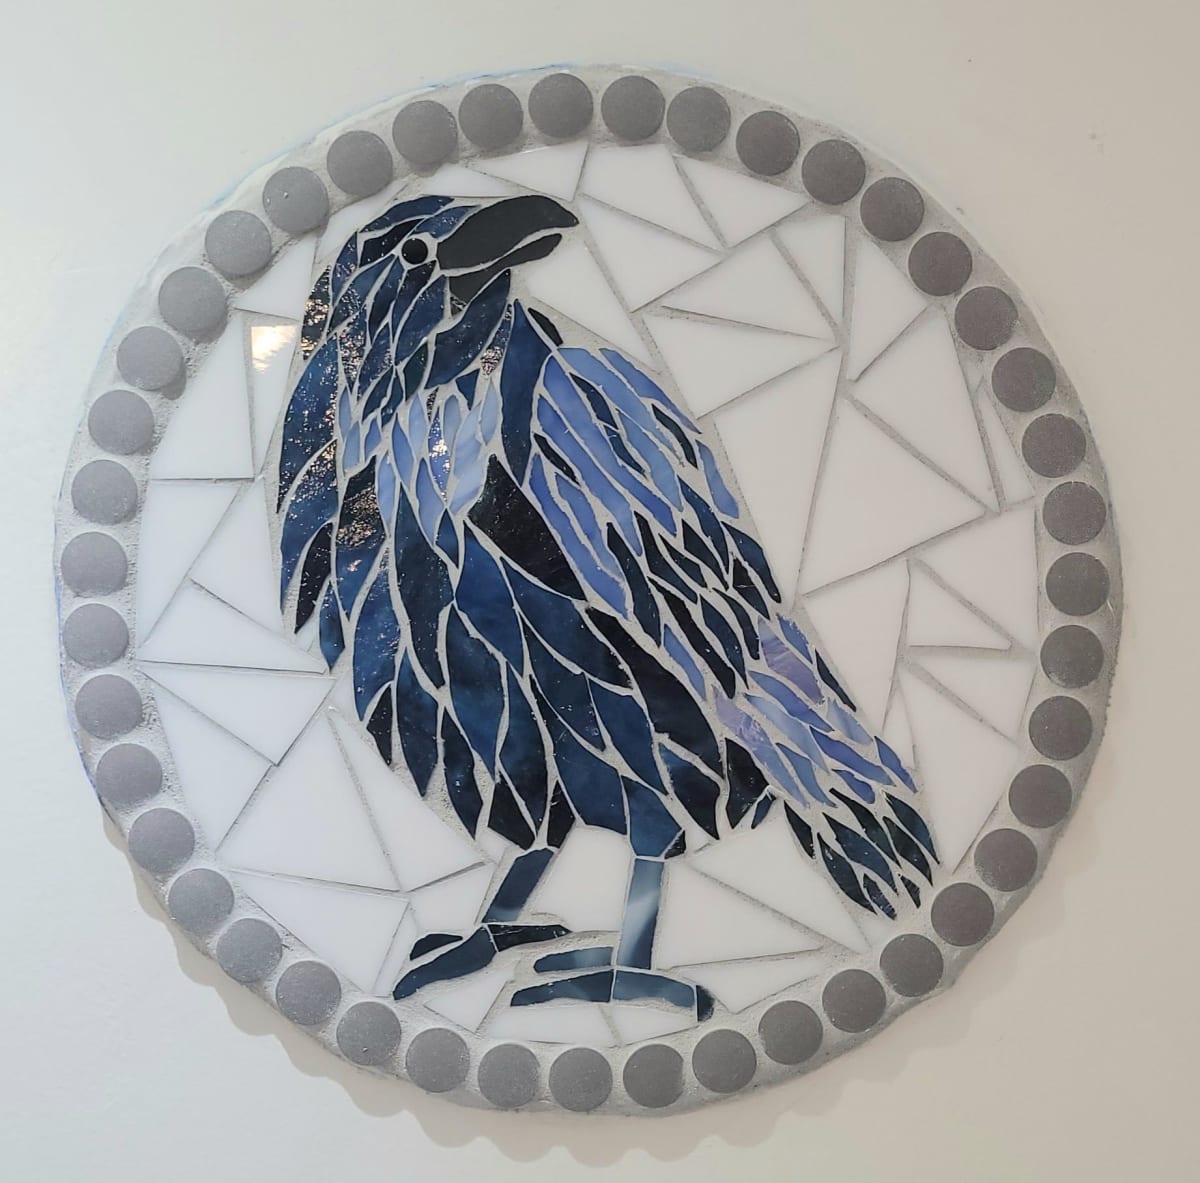 Blue Raven by Andrea L Edmundson  Image: Mosaic Raven mosaic on mesh, completed